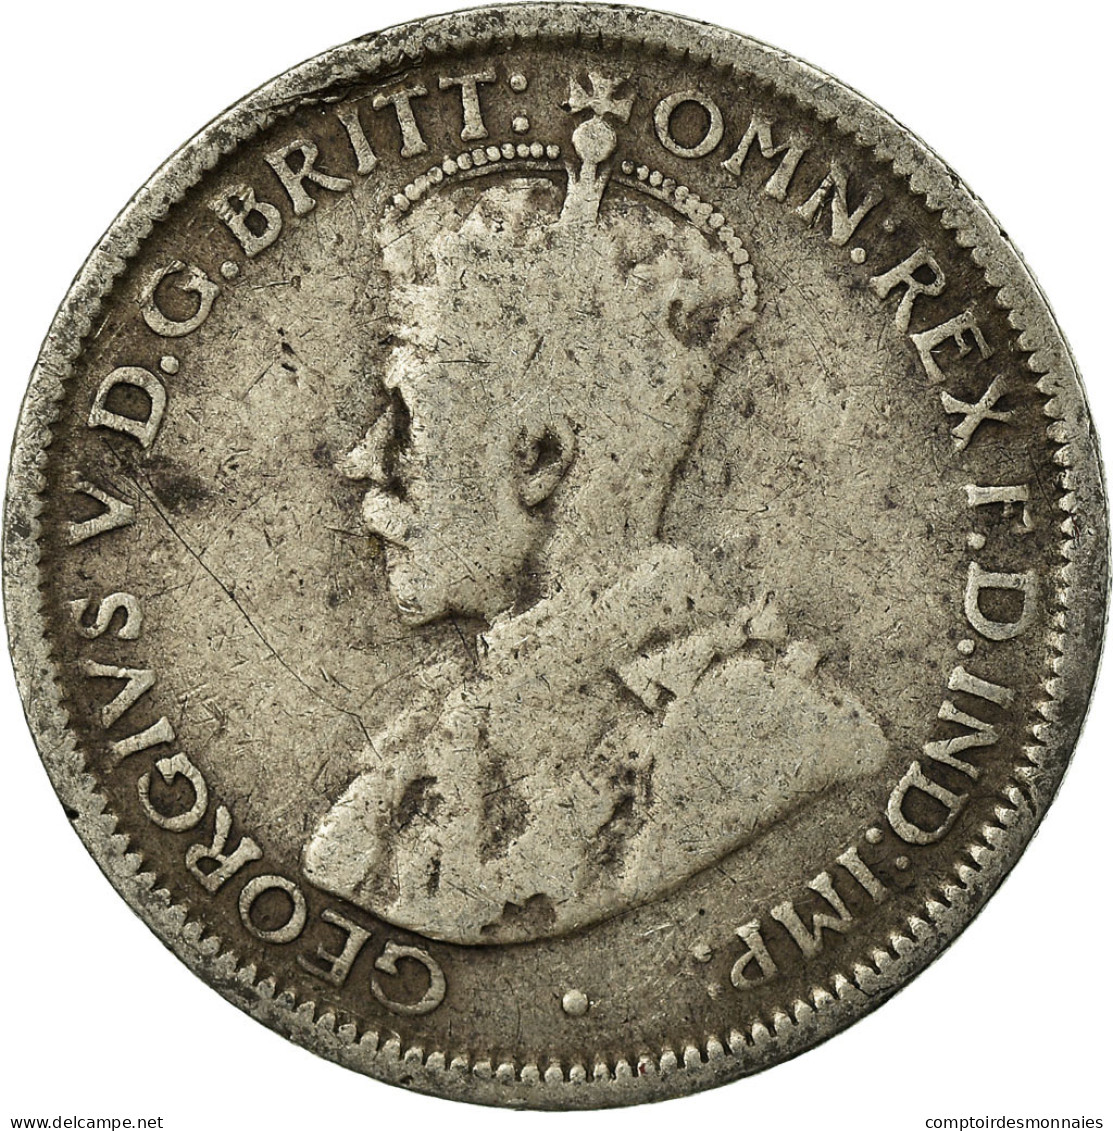 Monnaie, Australie, George V, Sixpence, 1926, TB+, Argent, KM:25 - Sixpence